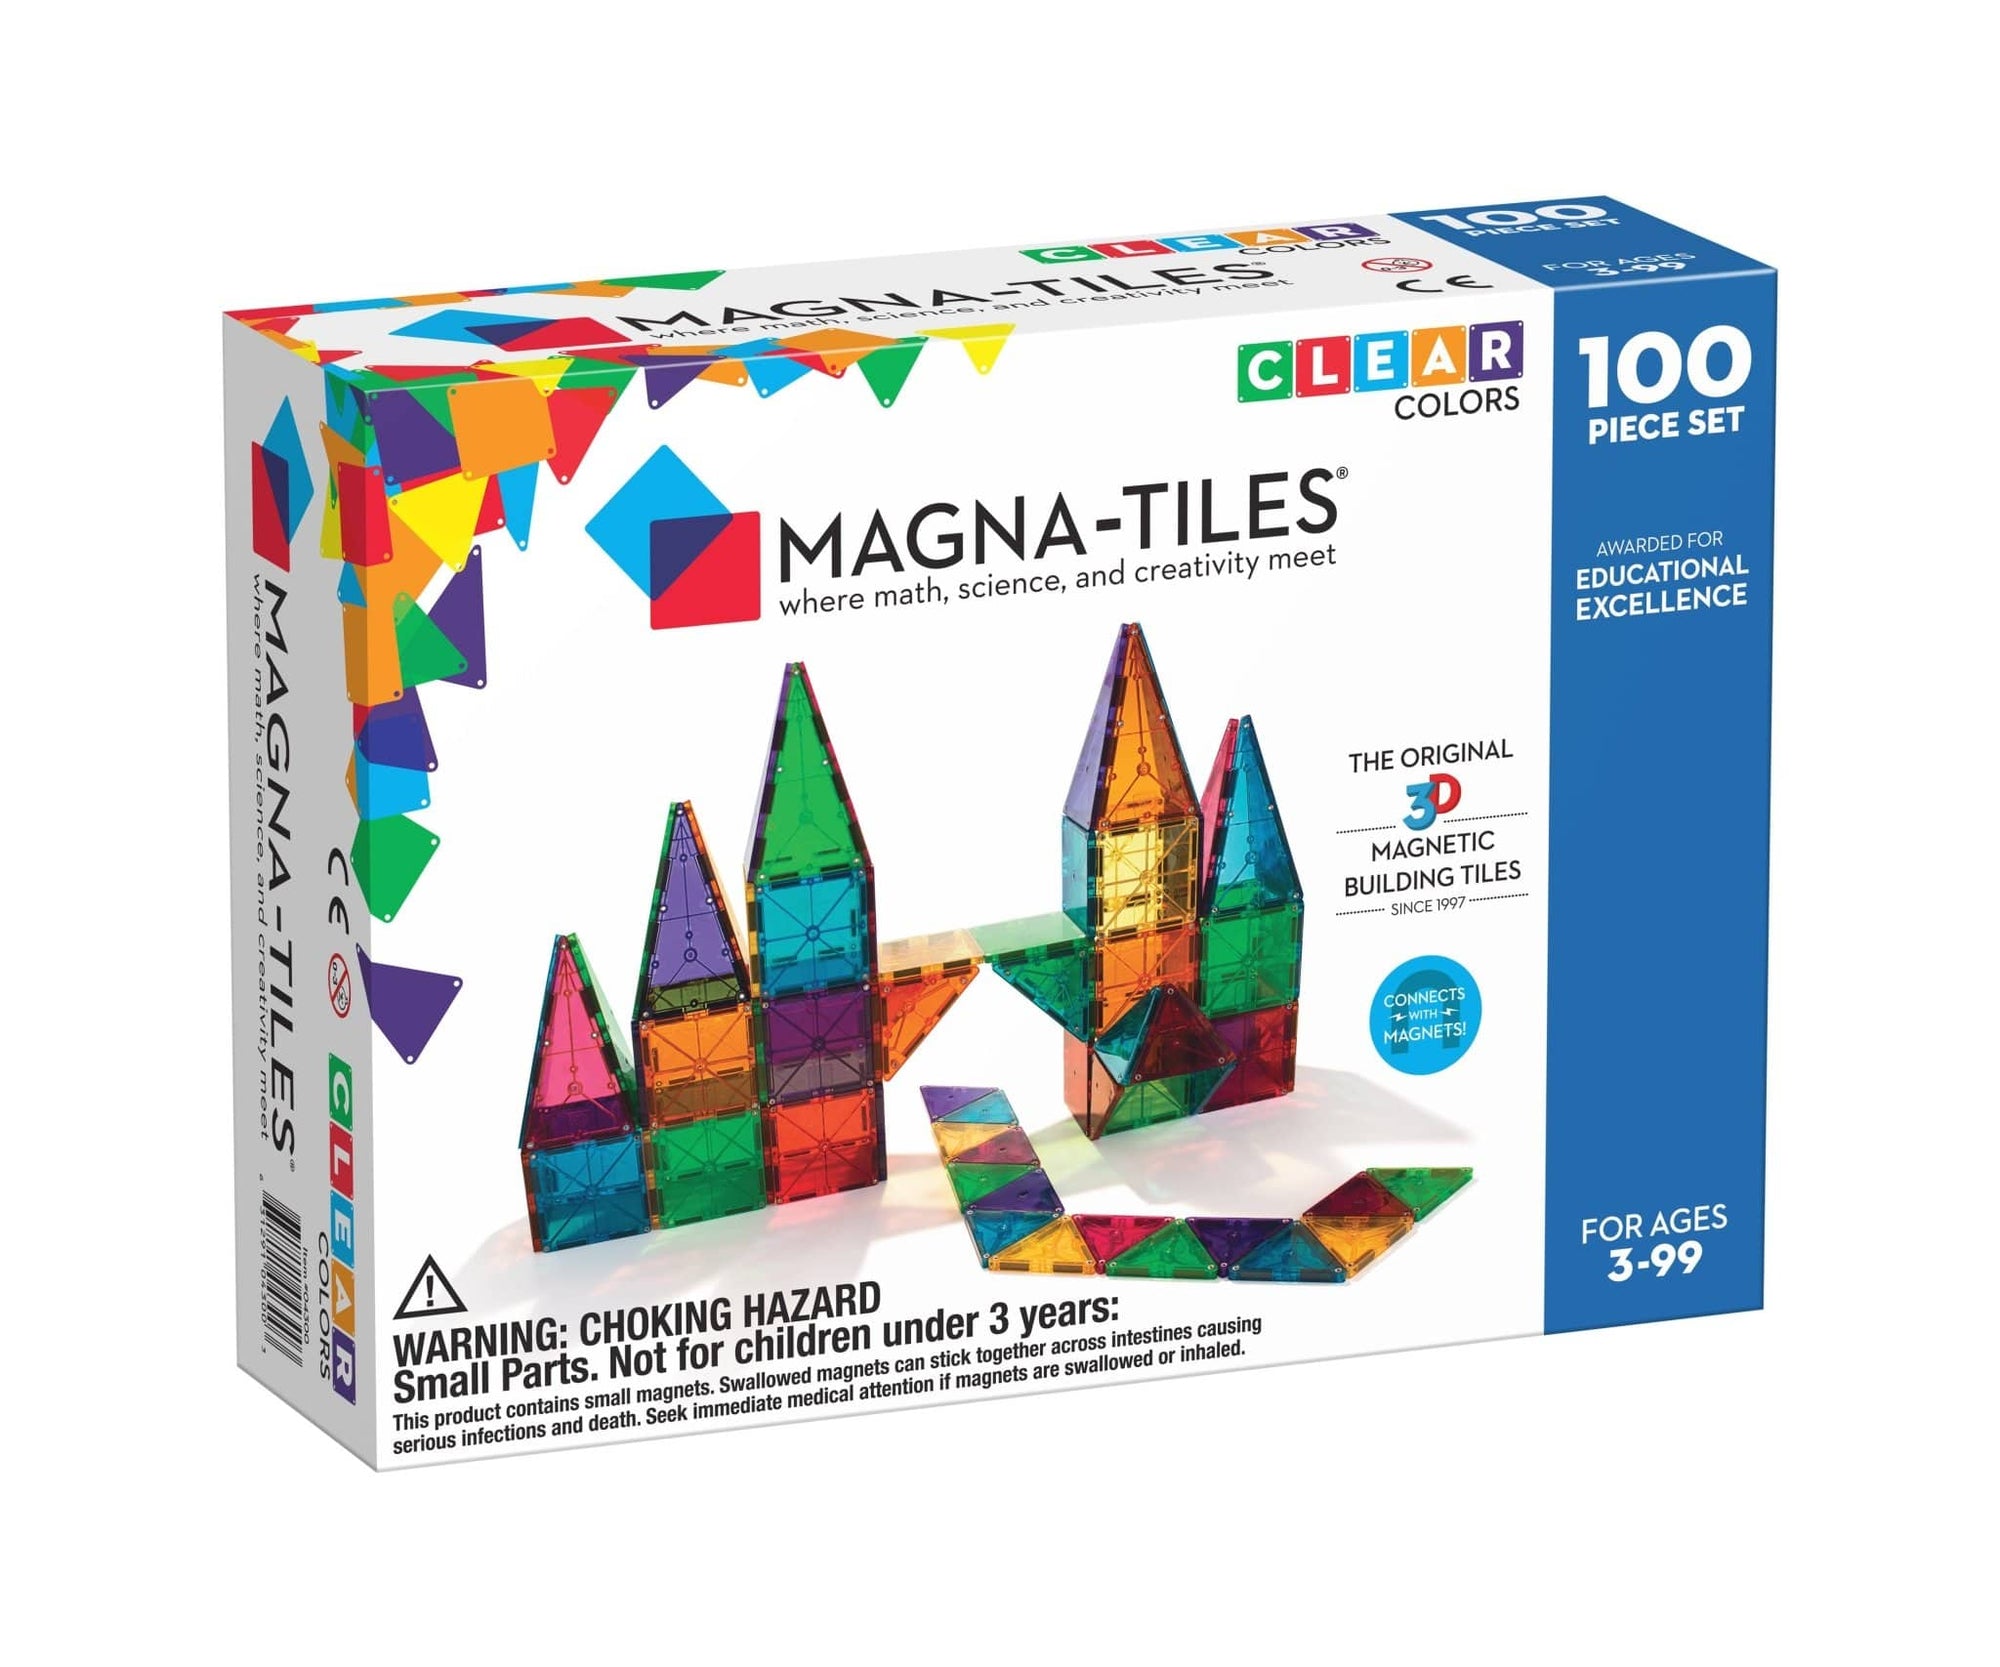 Magna-Tiles – Dino World – 40 Piece Set – Hugs For Kids